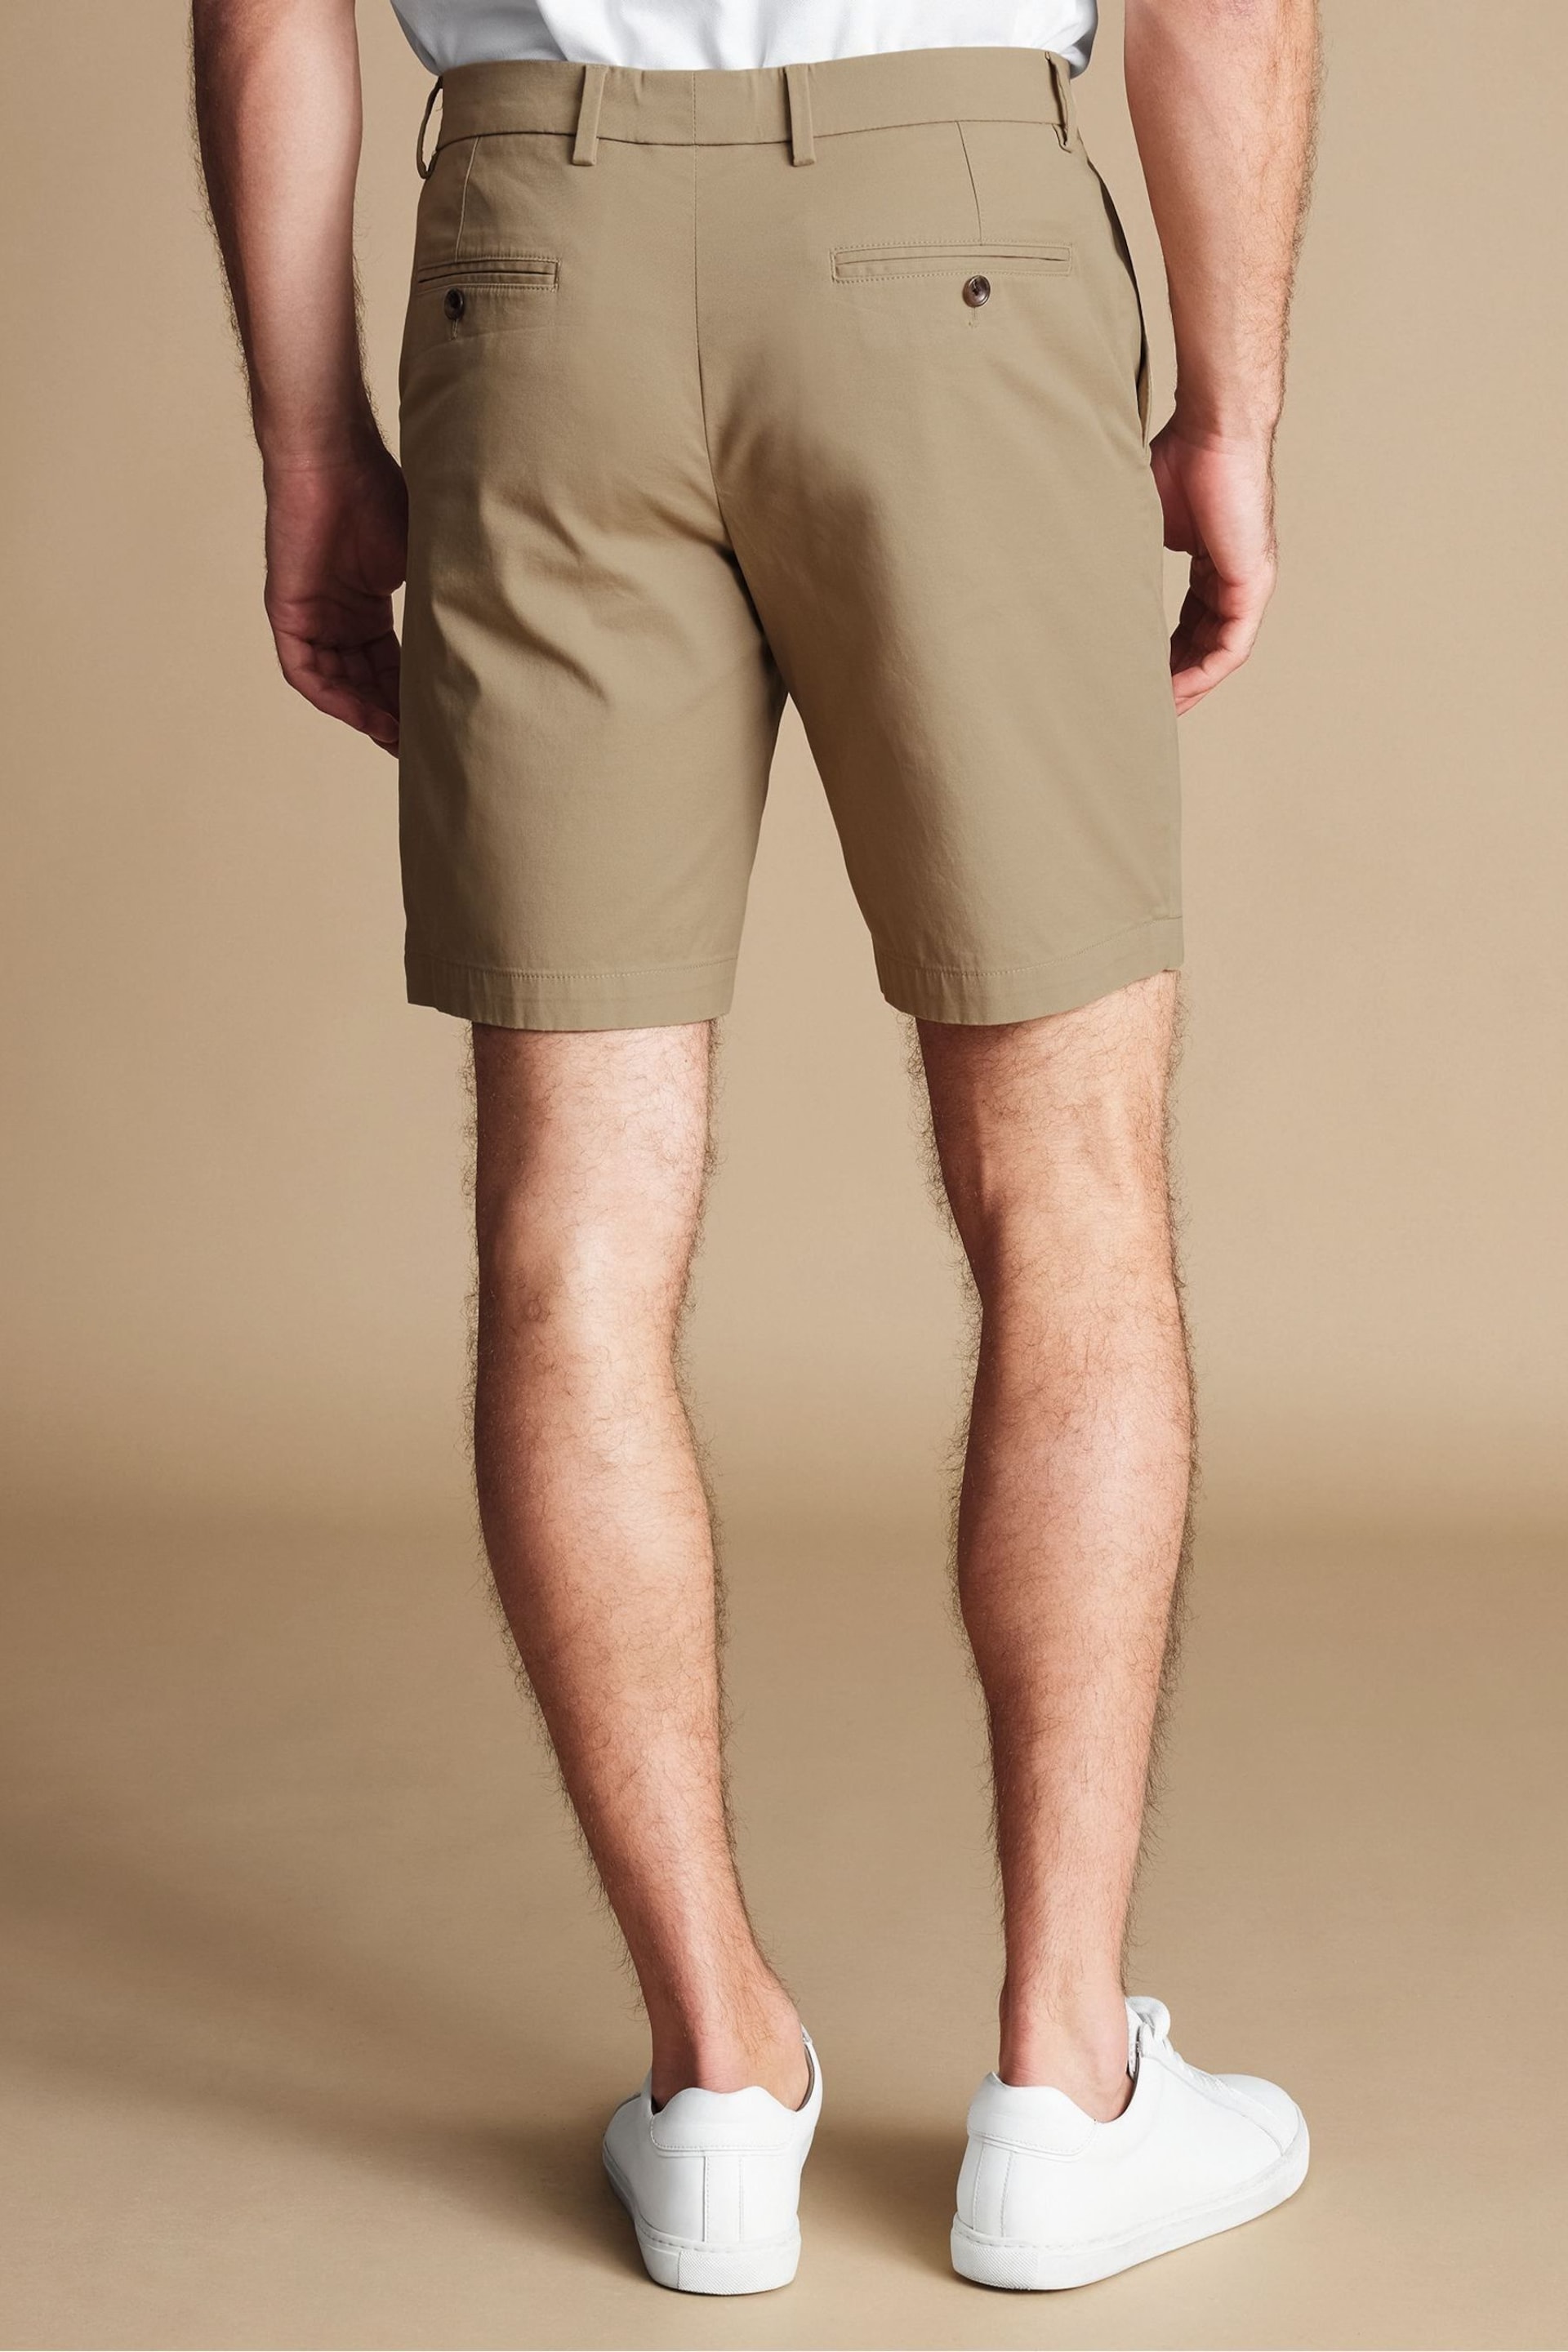 Charles Tyrwhitt Brown Cotton Shorts - Image 2 of 6